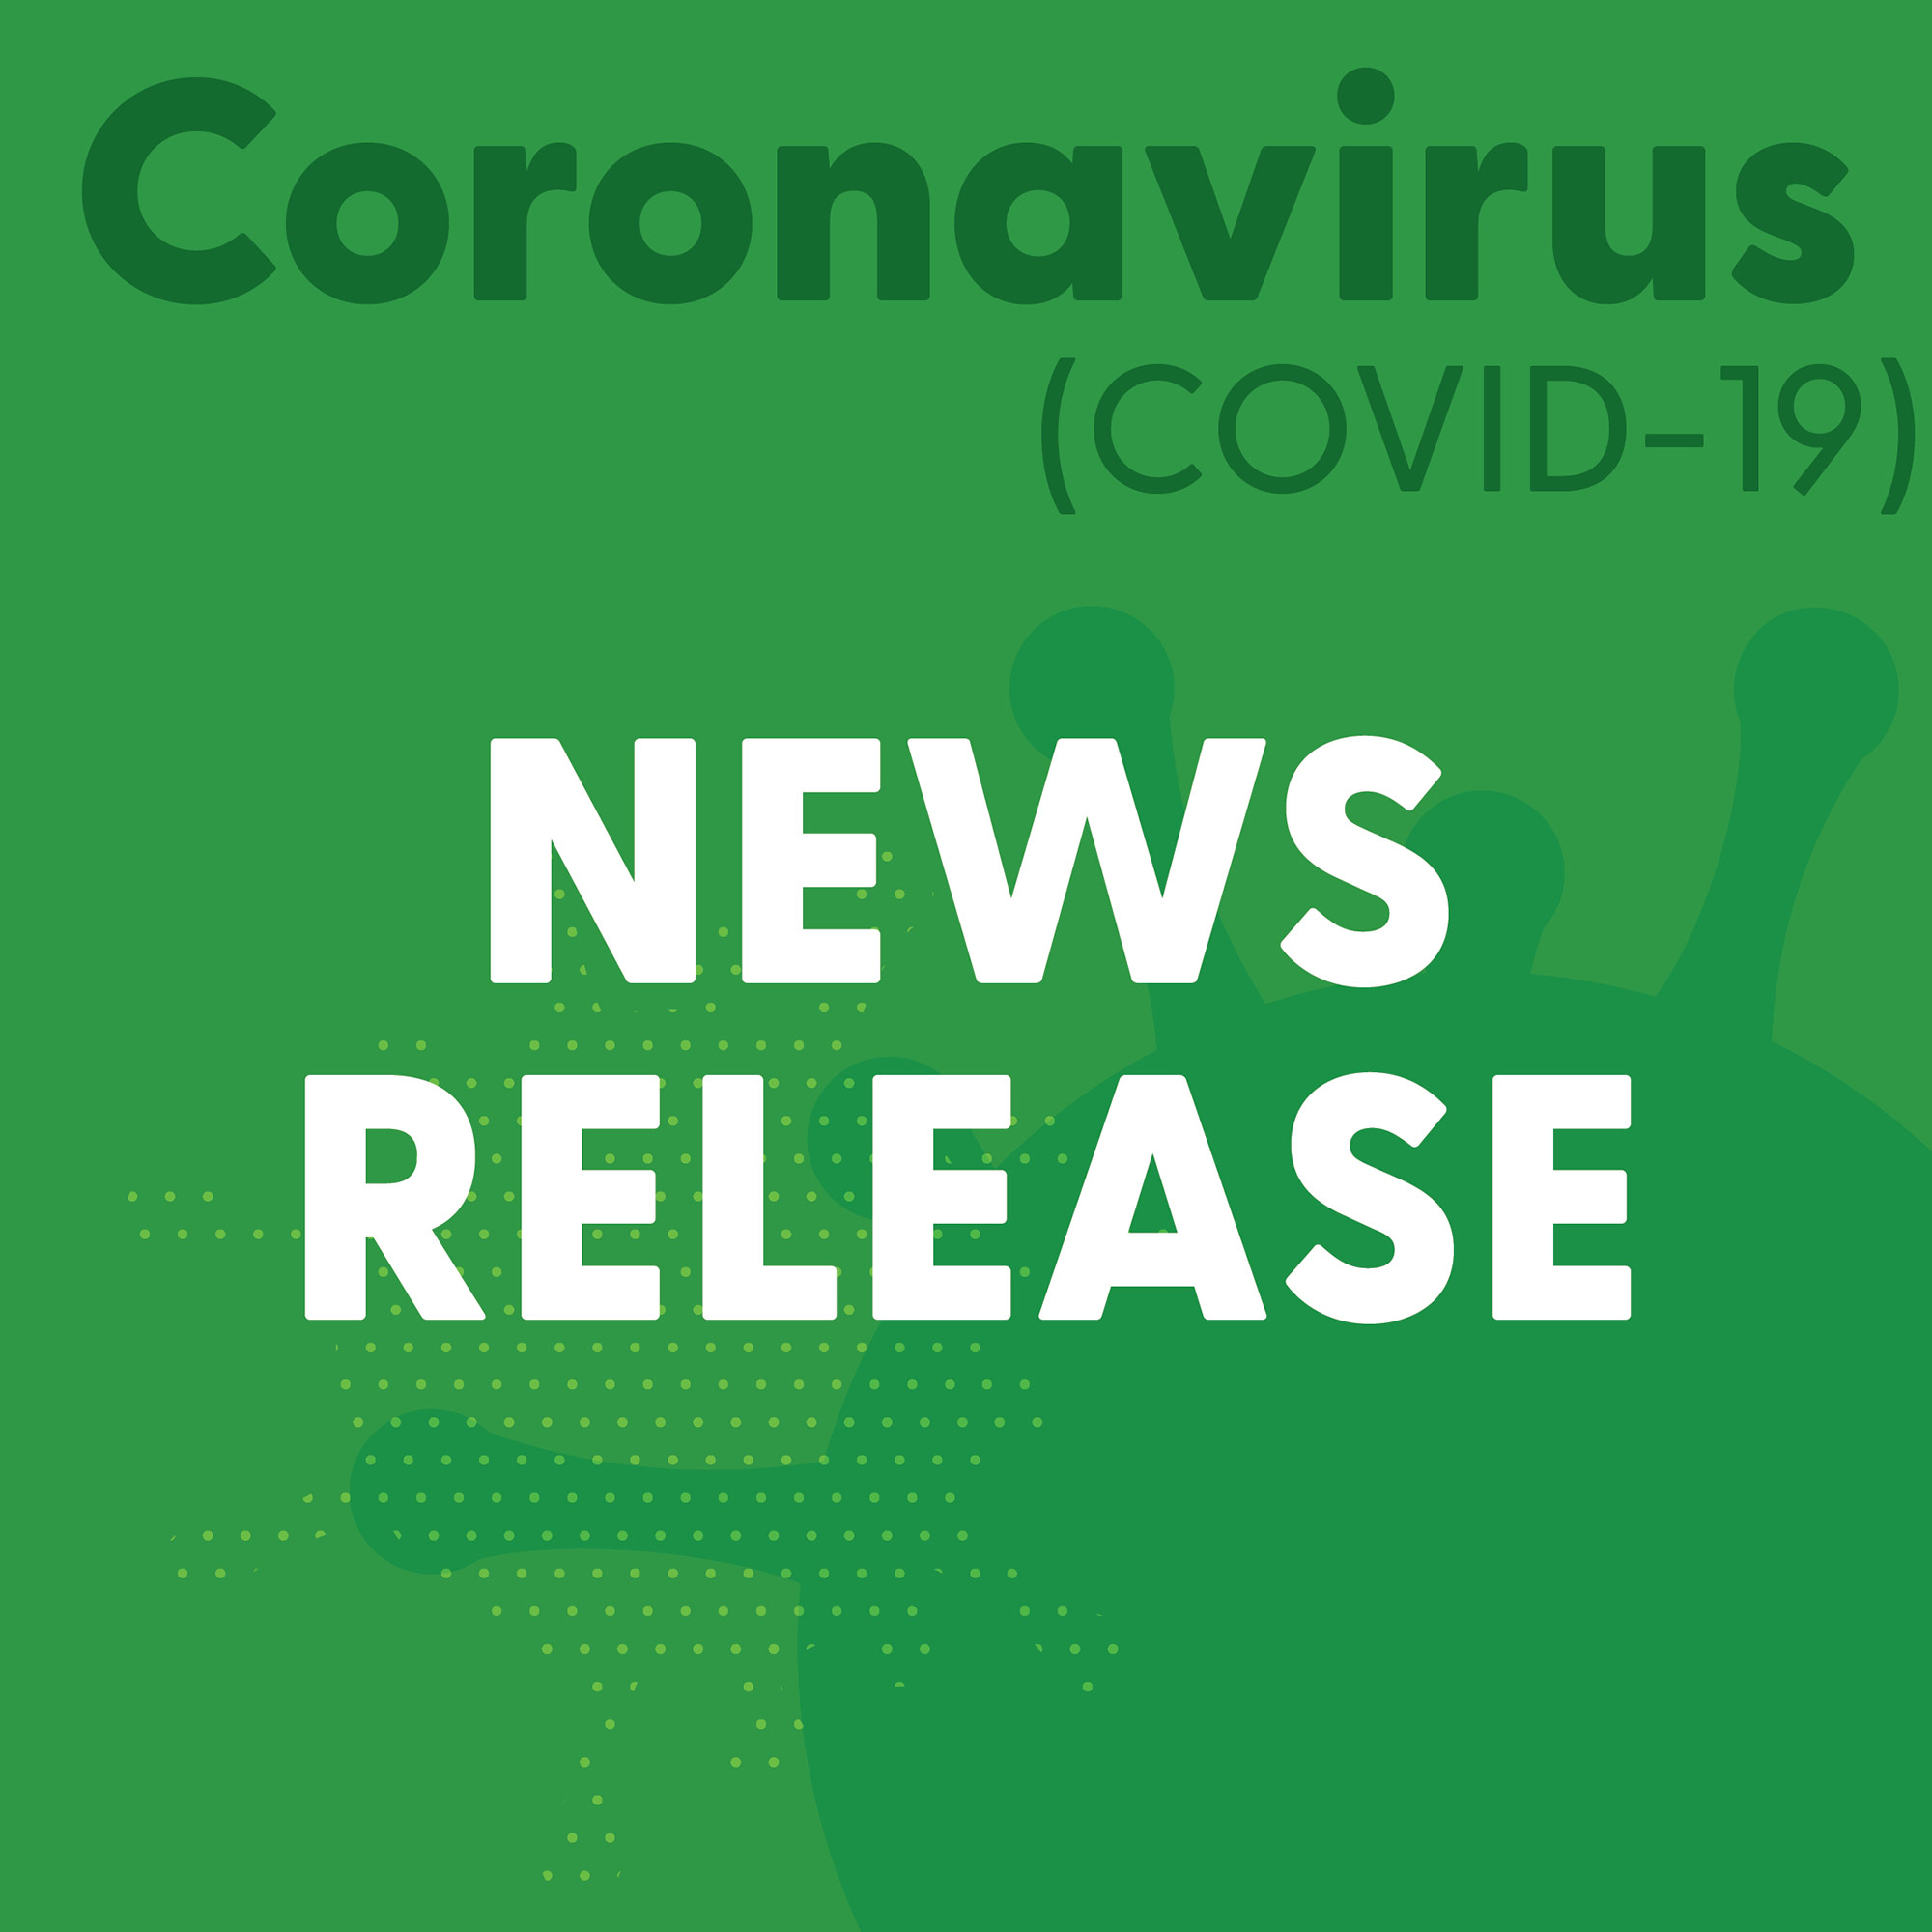 Coronavirus 2019 (COVID-19) News Release